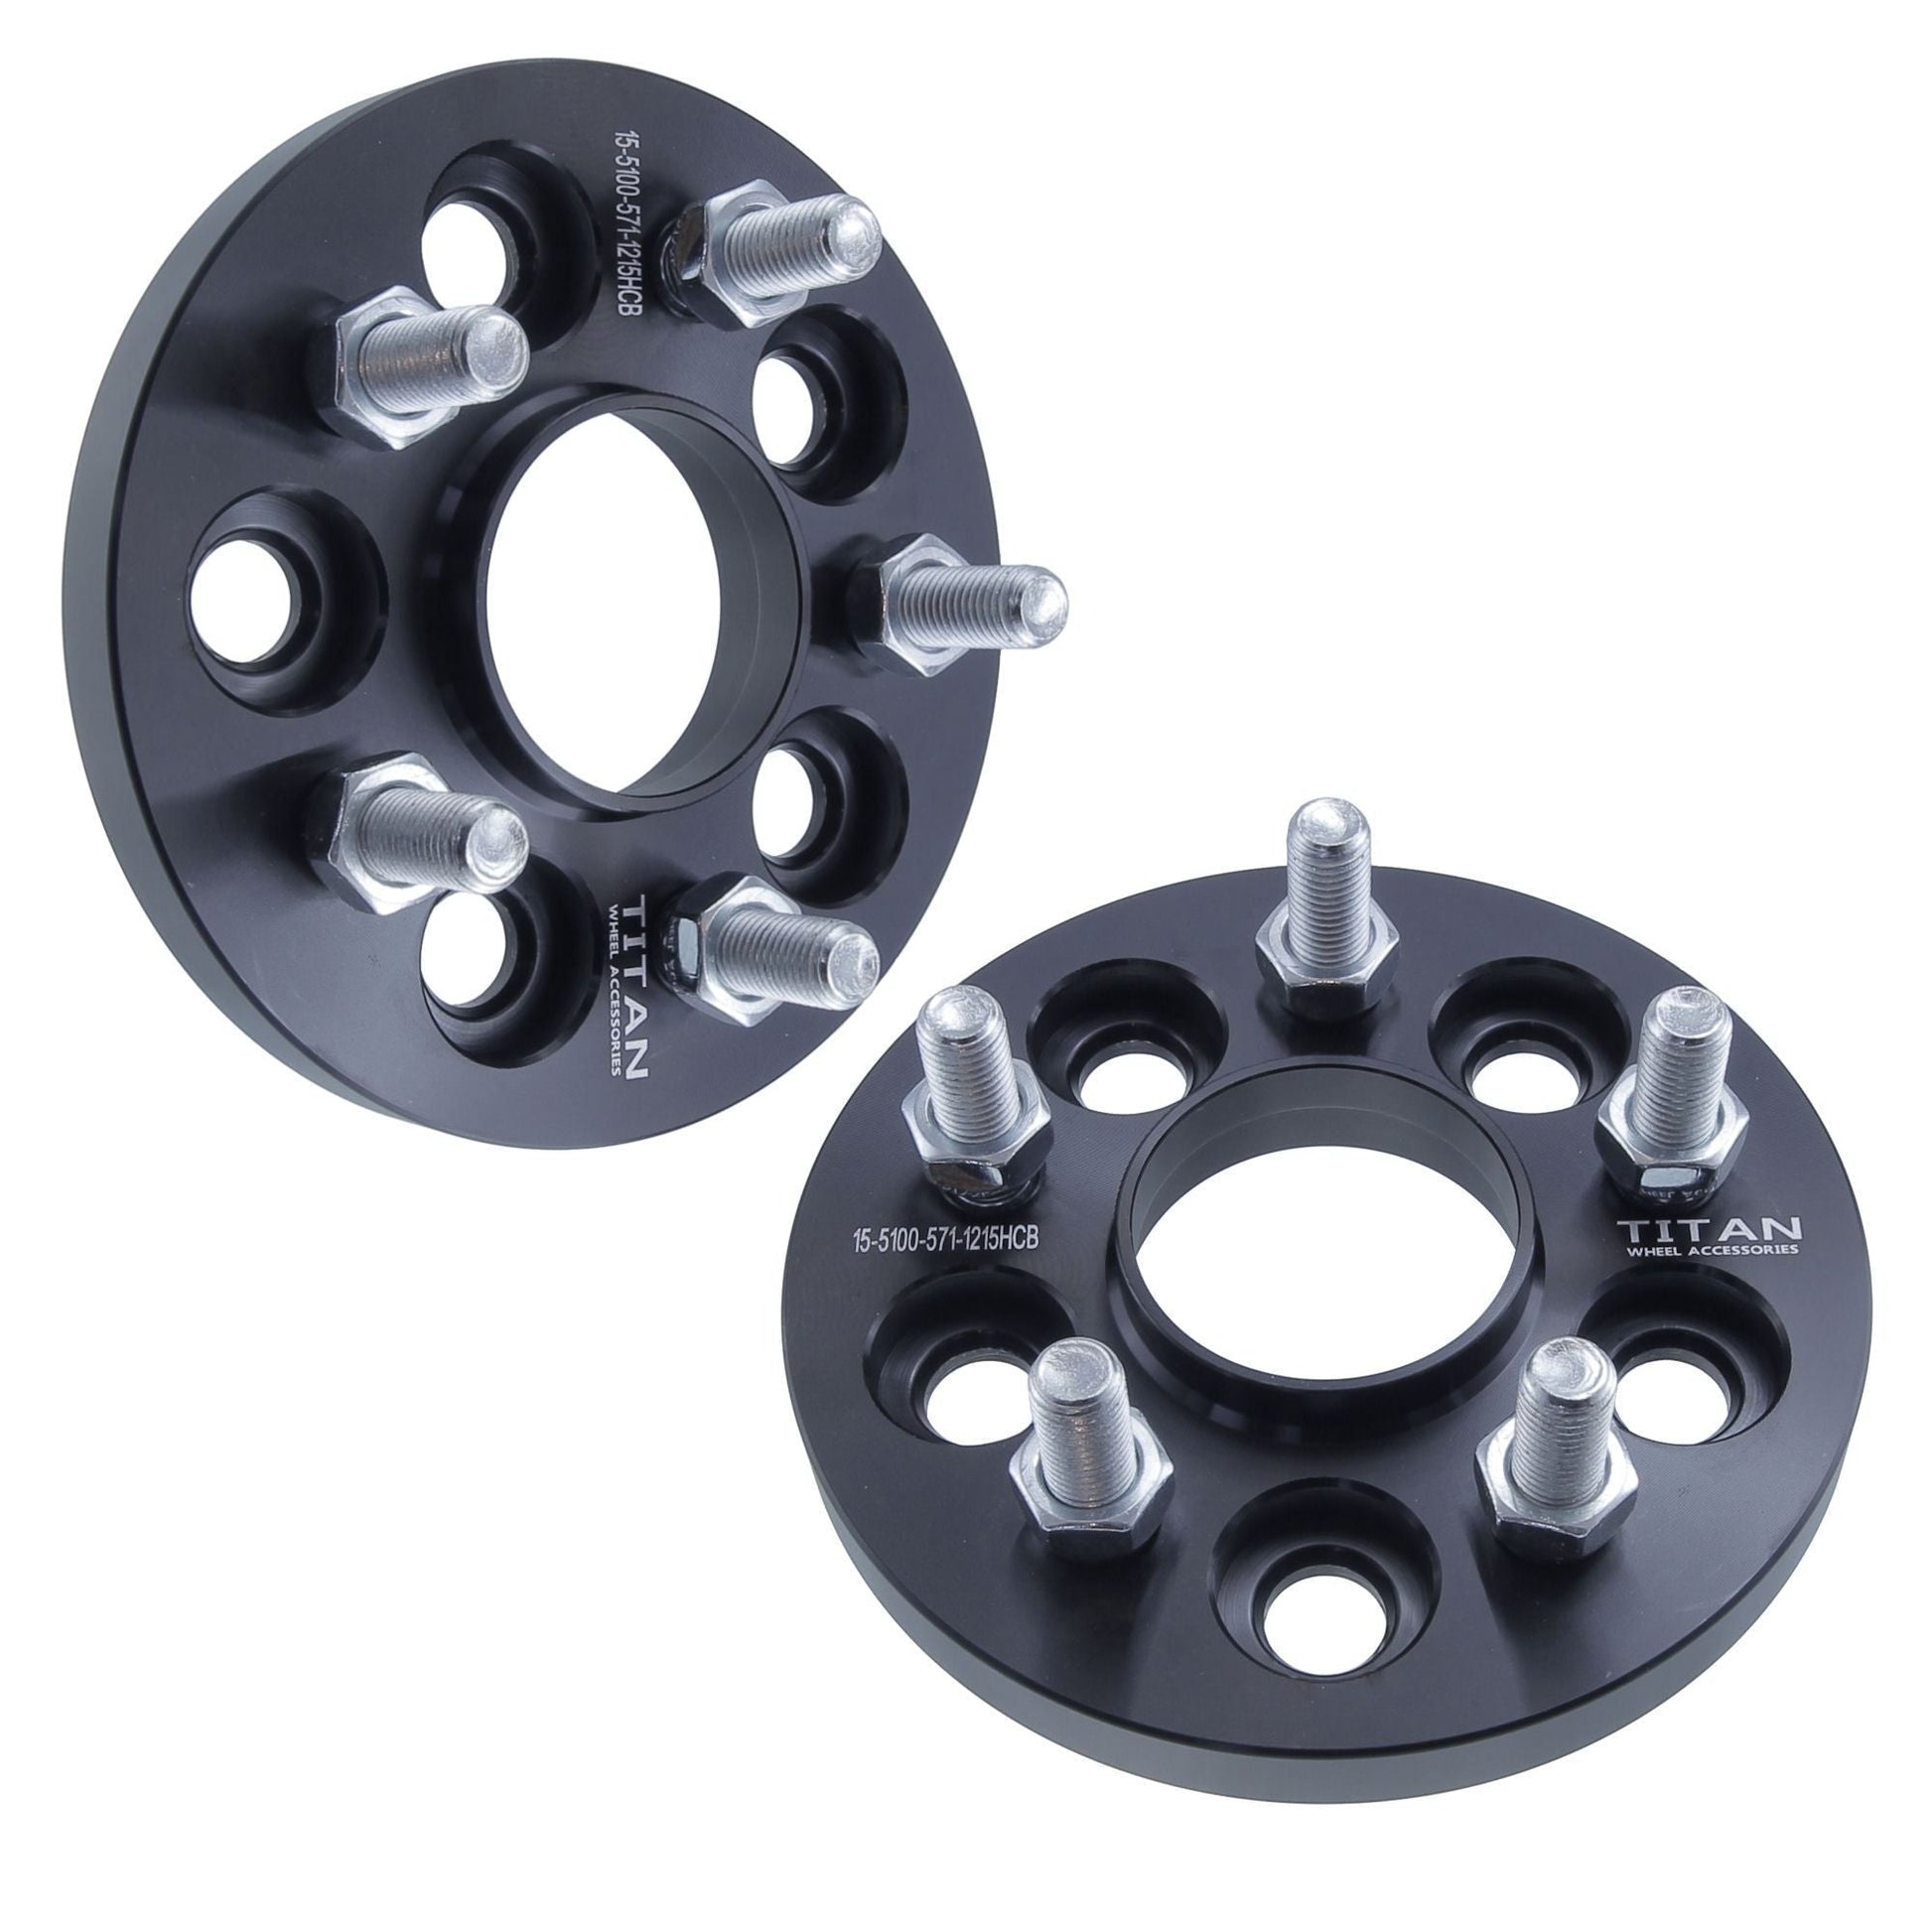 15mm Titan Wheel Spacers for Chrysler Sebring Neon Pontiac Grand Am | 5x100 | 57.1 Hubcentric |12x1.5 Studs |  Set of 4 | Titan Wheel Accessories